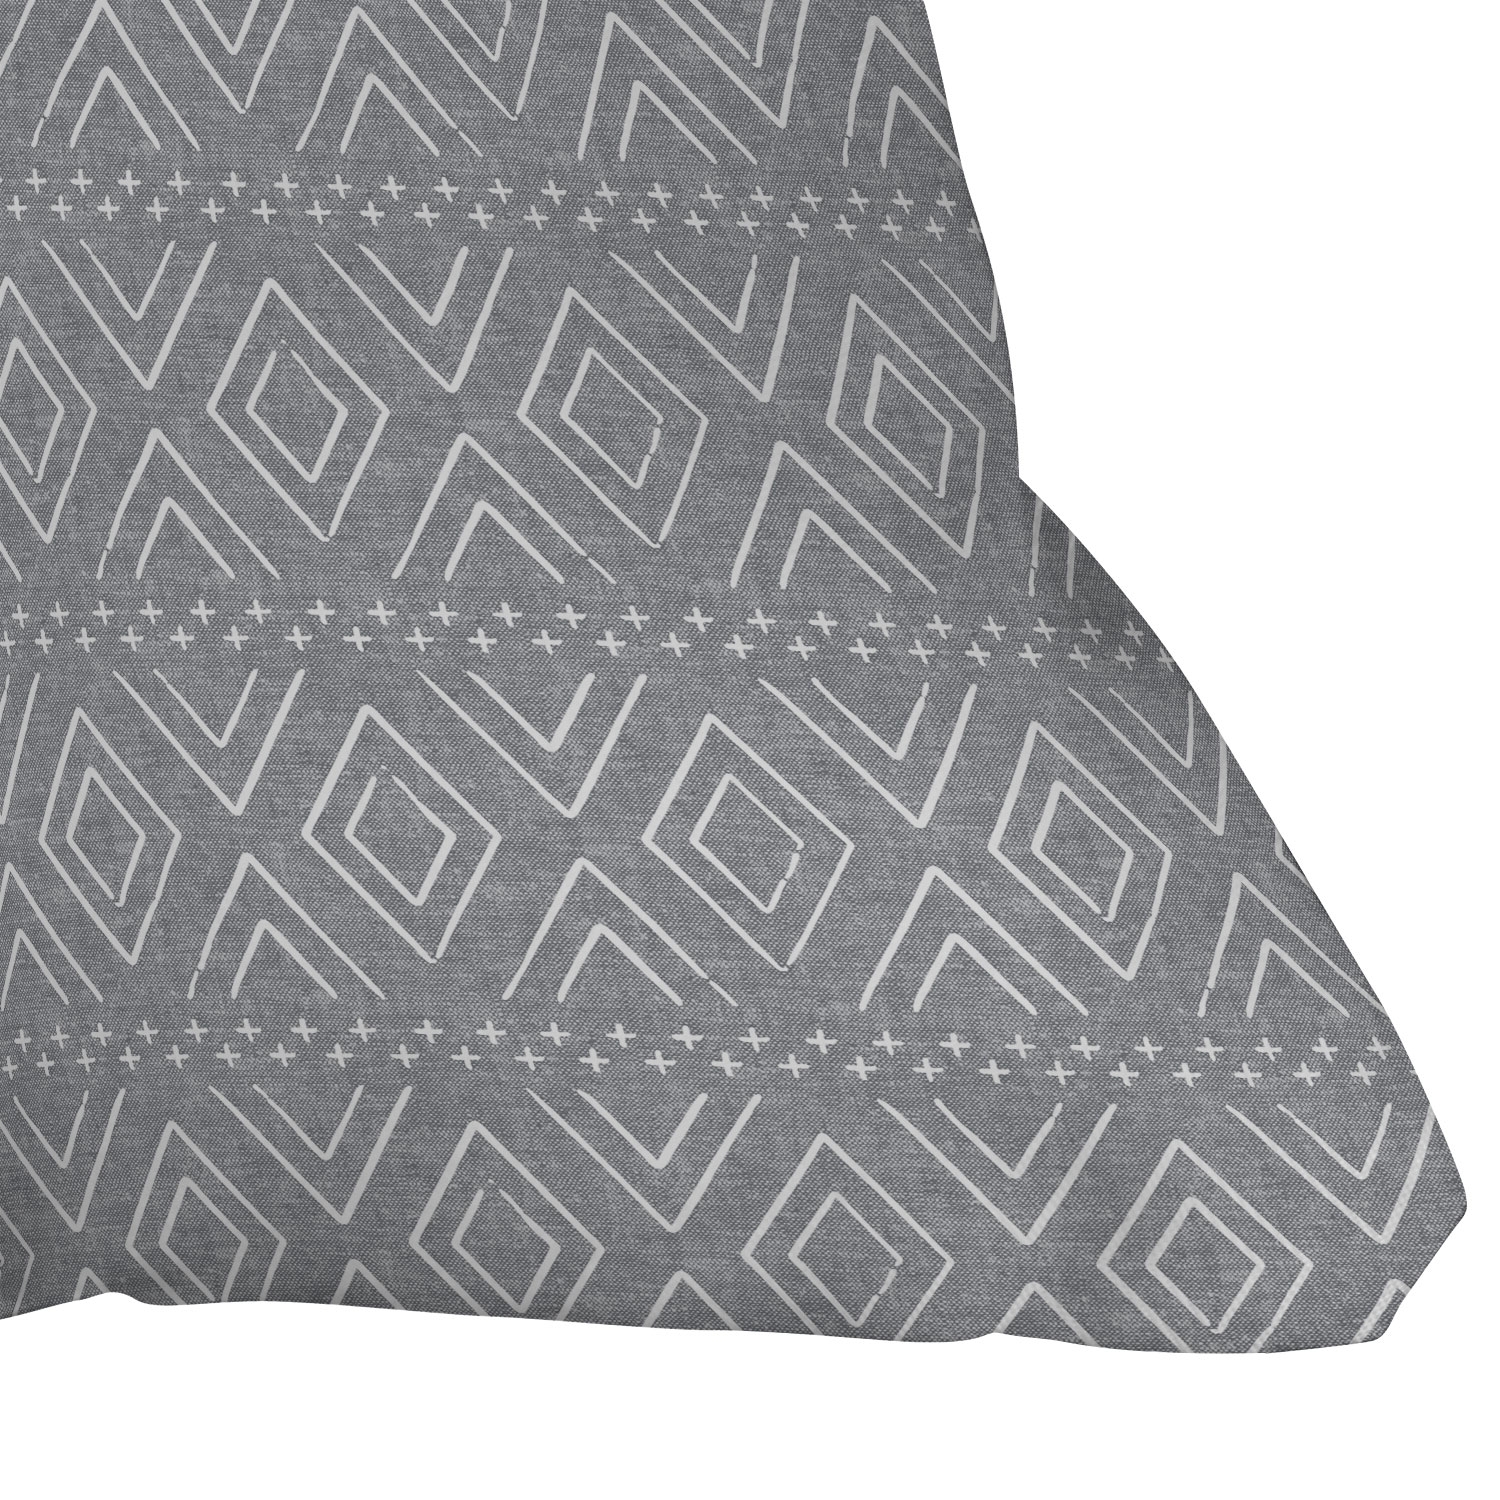 Farmhouse Diamonds Gray by Little Arrow Design Co - Outdoor Throw Pillow 16" x 16" - Image 2